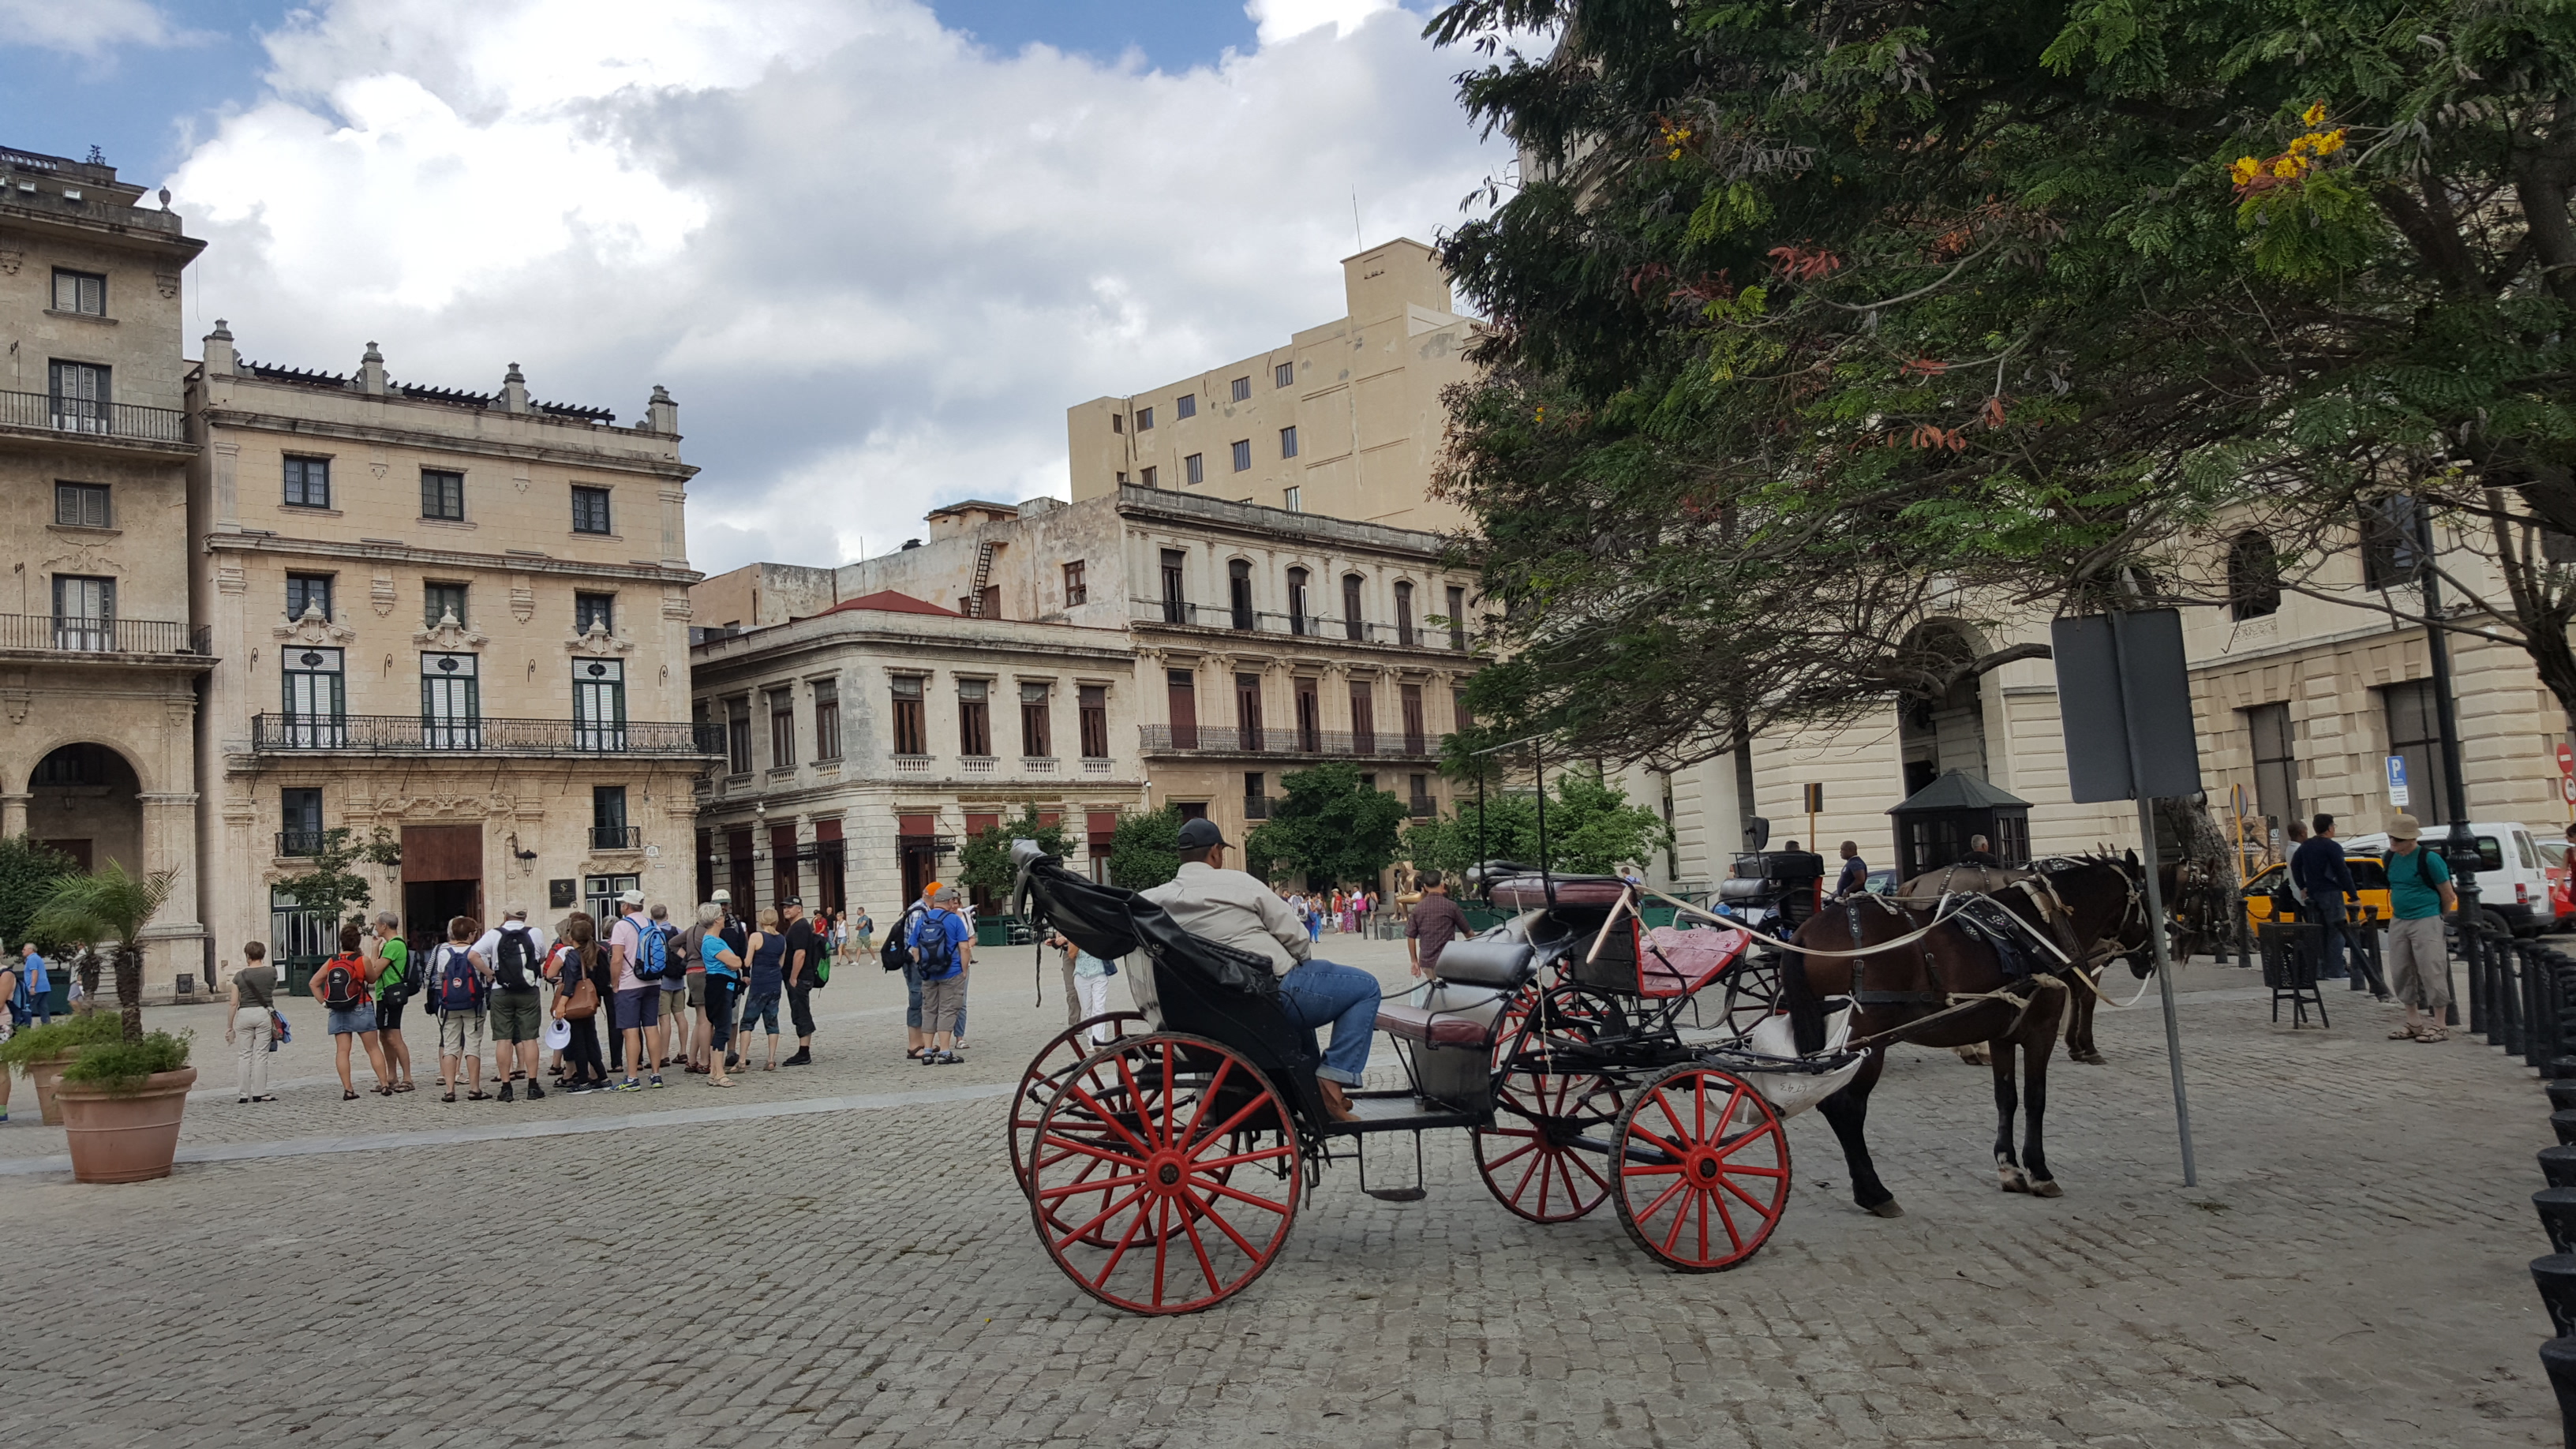 Things I Learned on My Trip to Cuba – Havana Trip Summary